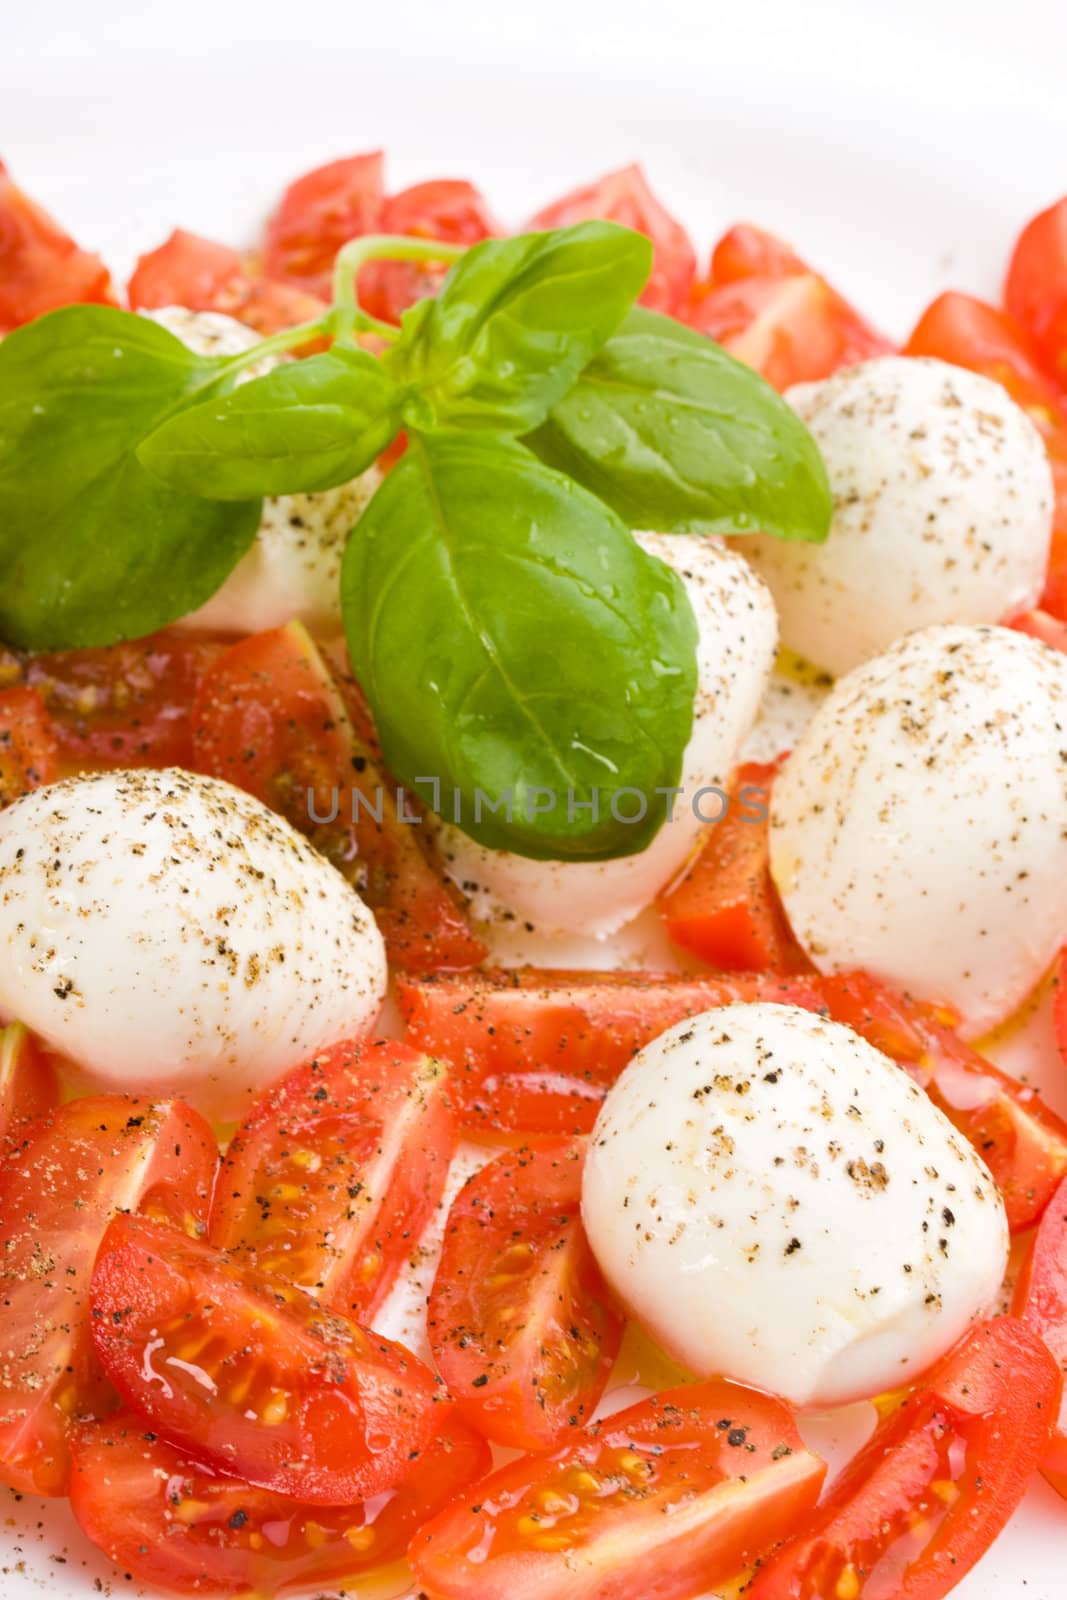 tomatoes, mozzarella and basil: insalada caprese by bernjuer